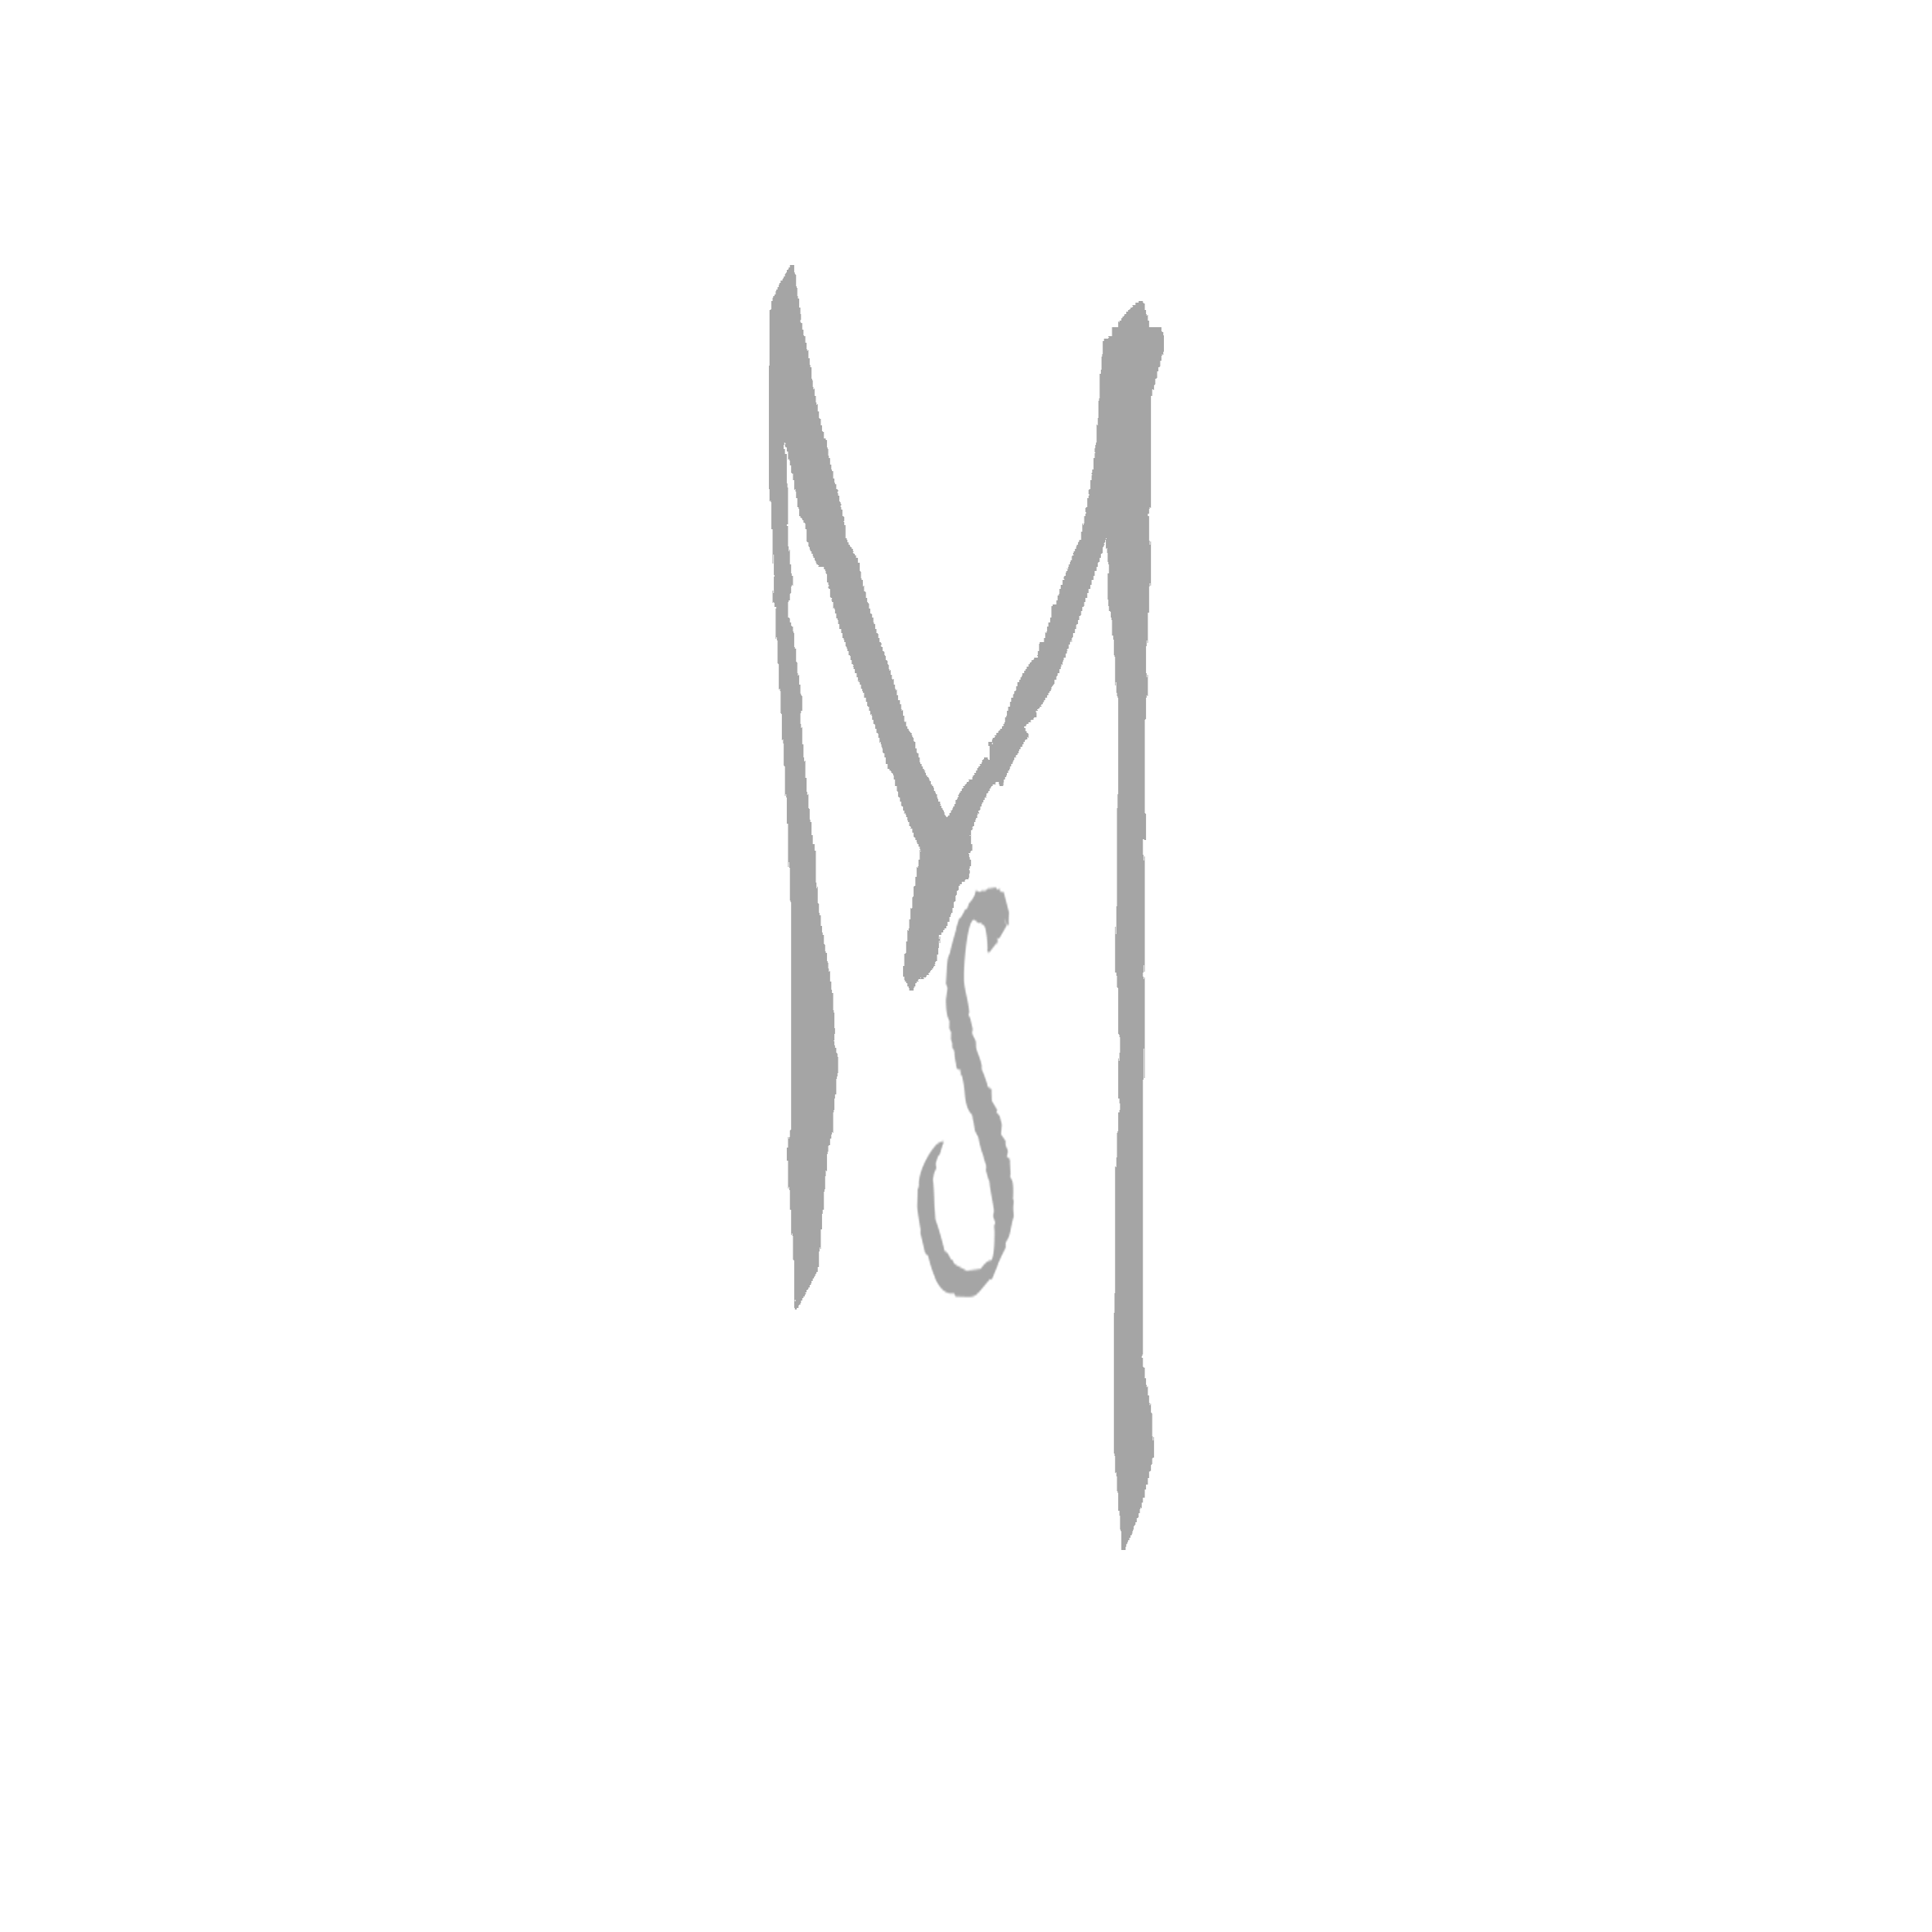 logo ms